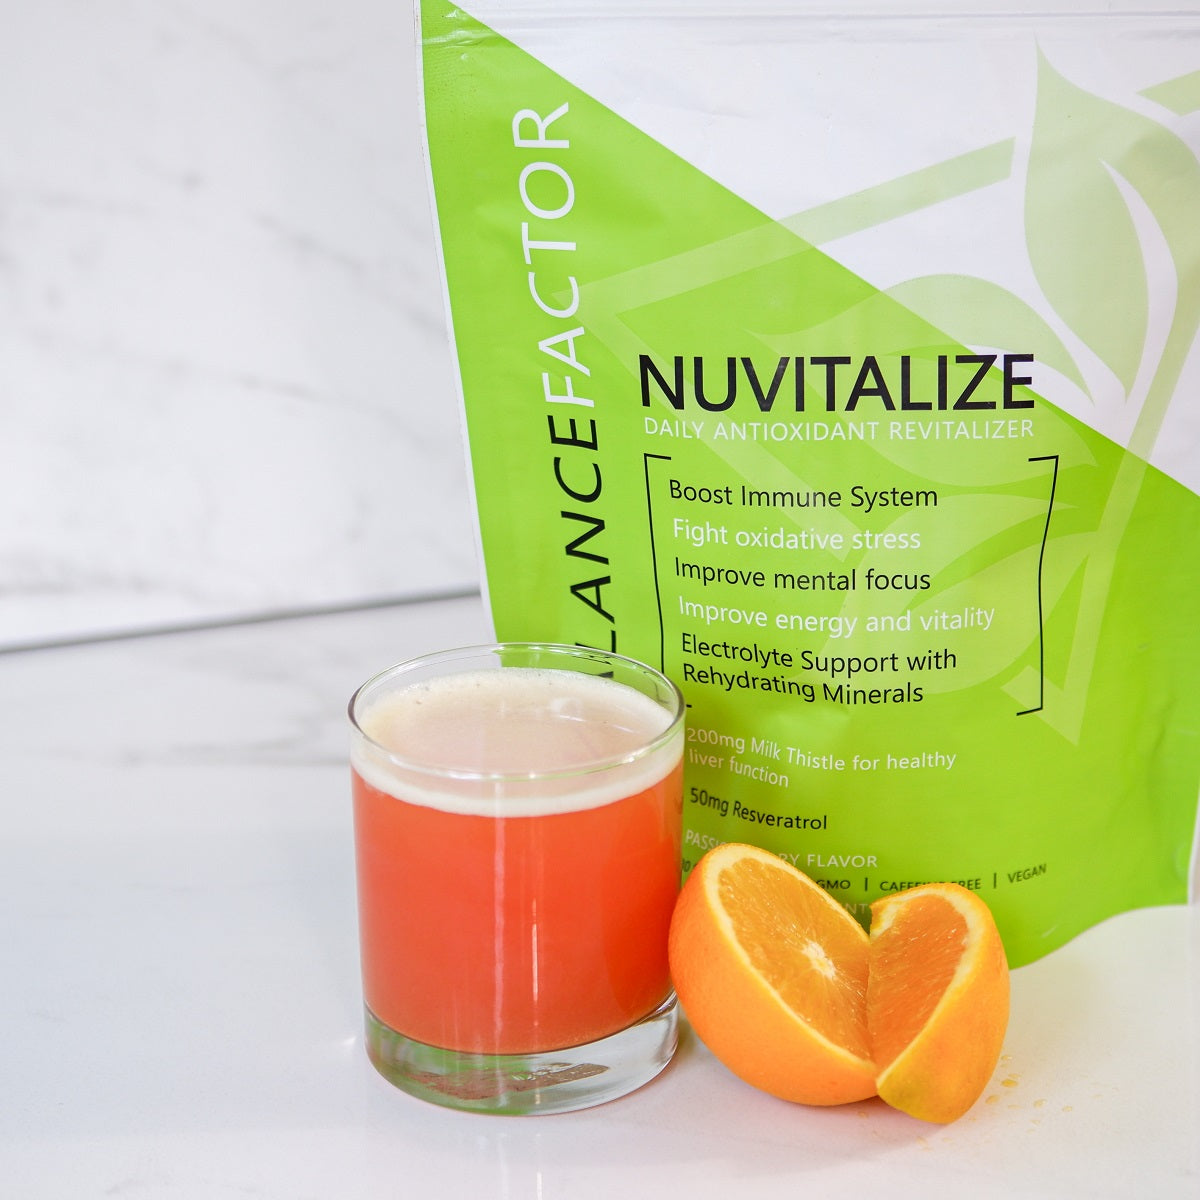 Nuvitalize Antioxidant Revitalizer